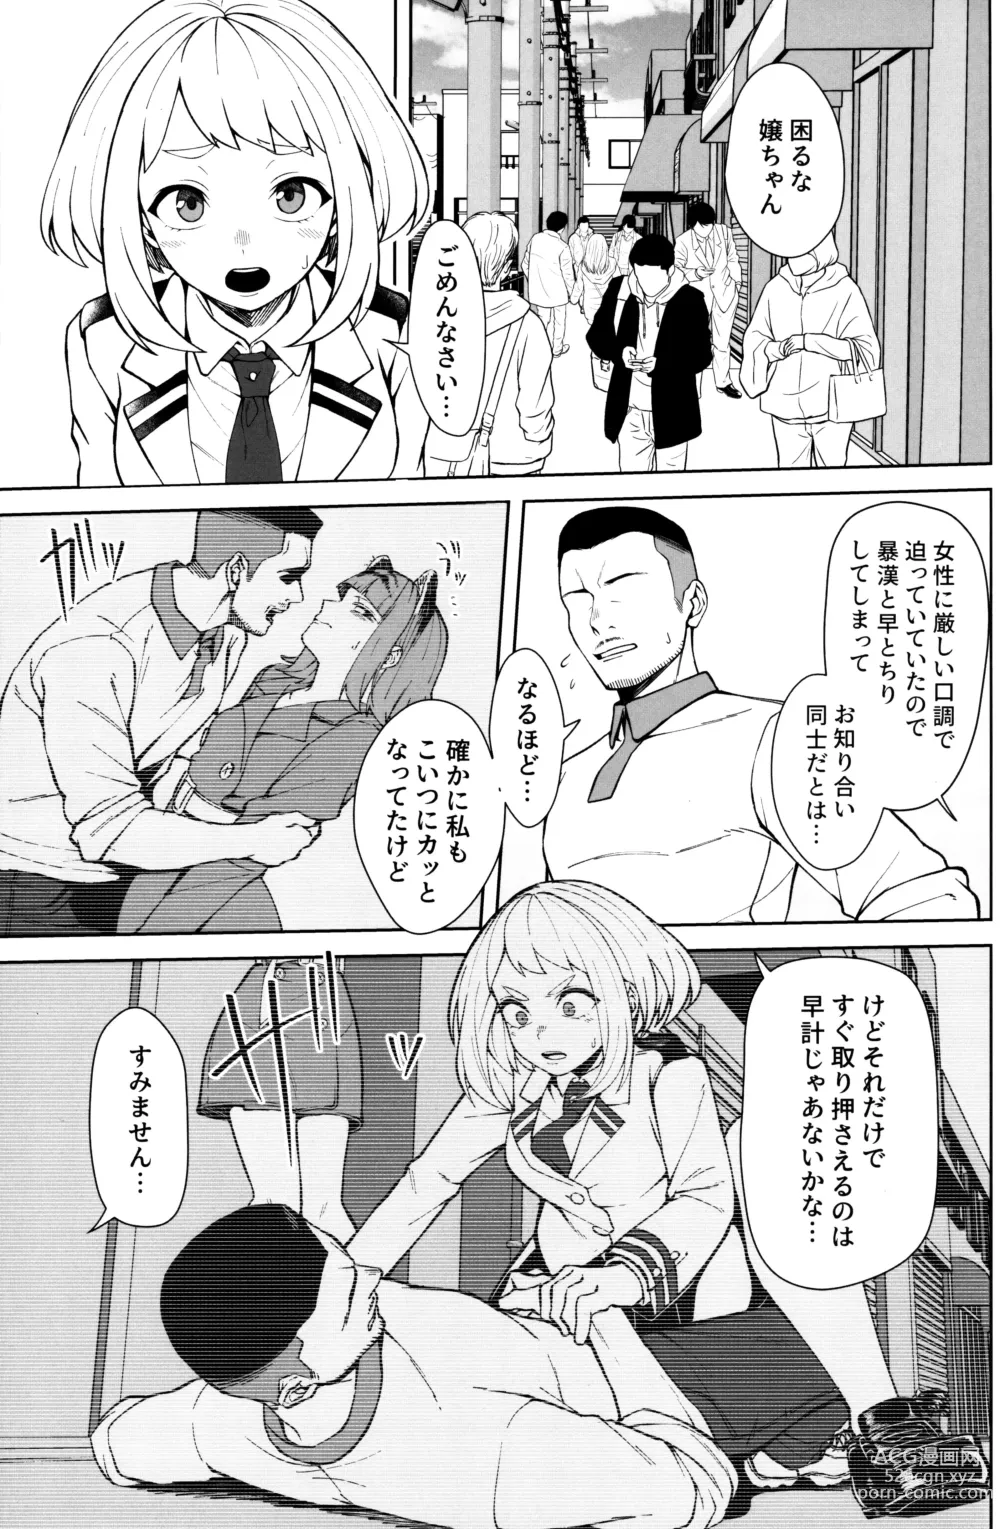 Page 2 of doujinshi Pathetic Heroism